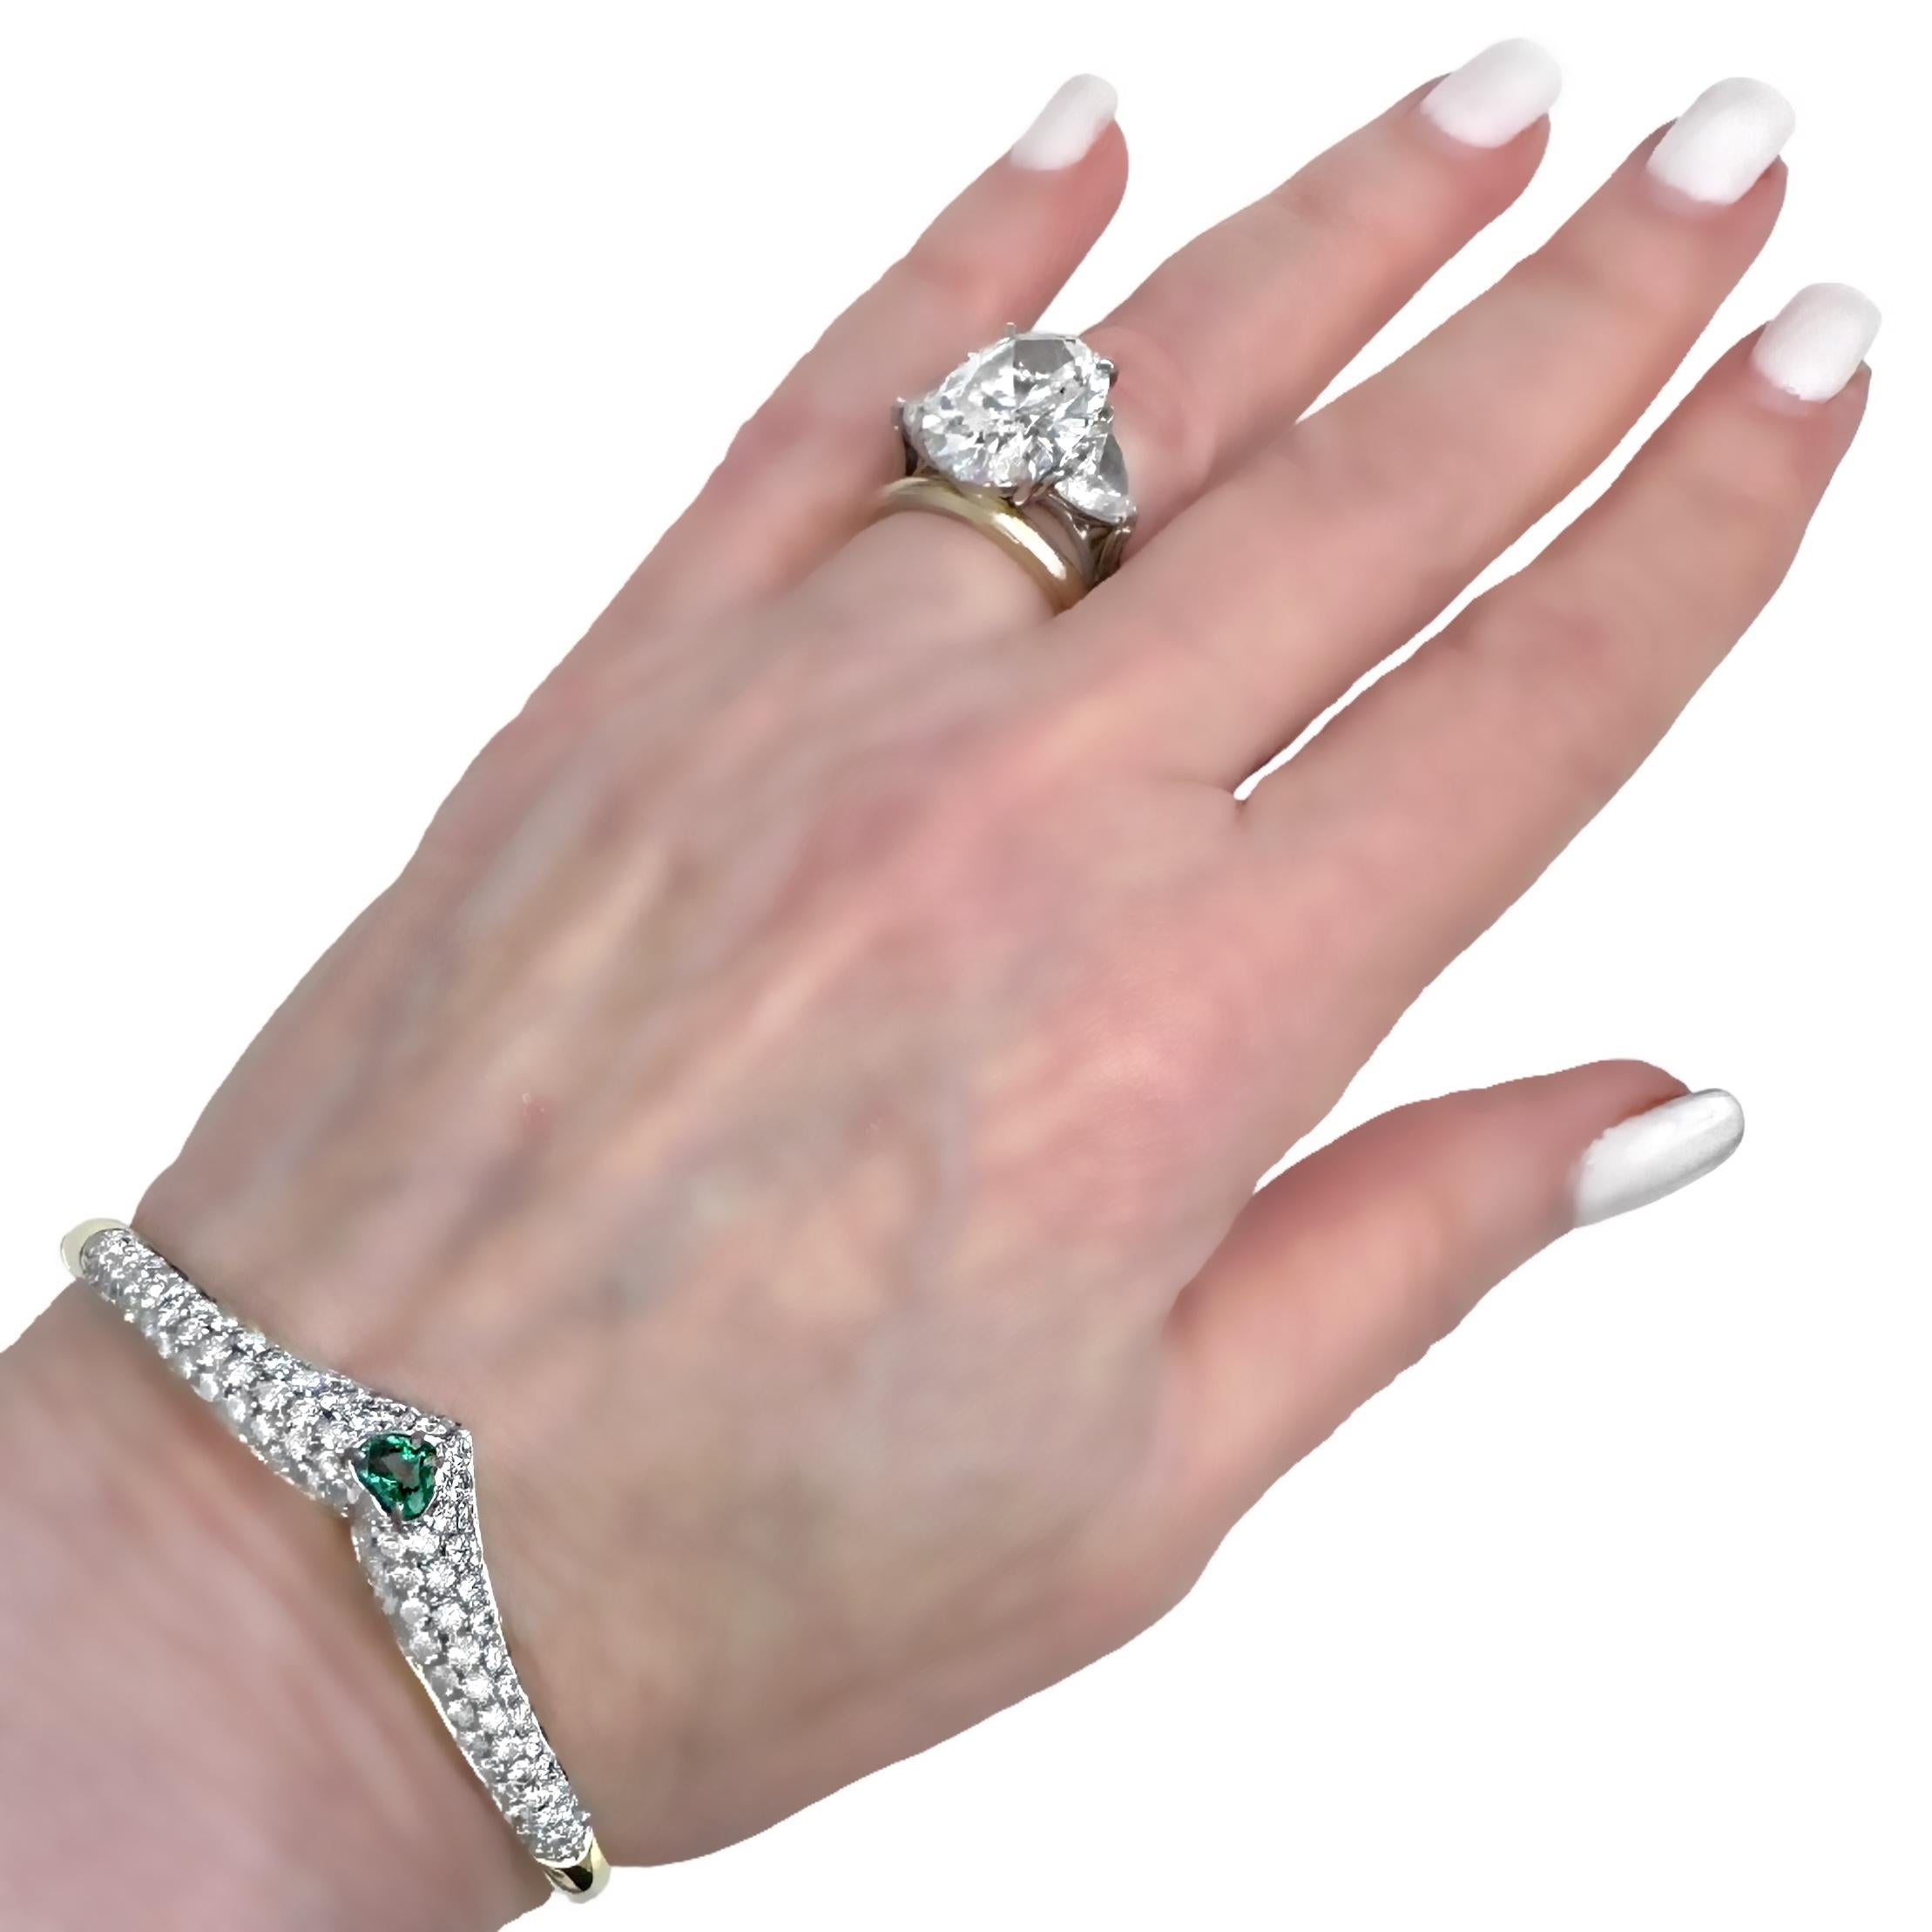  Stylish 18k Gold Bangle Bracelet with Heart Shaped Emerald and Diamonds For Sale 4